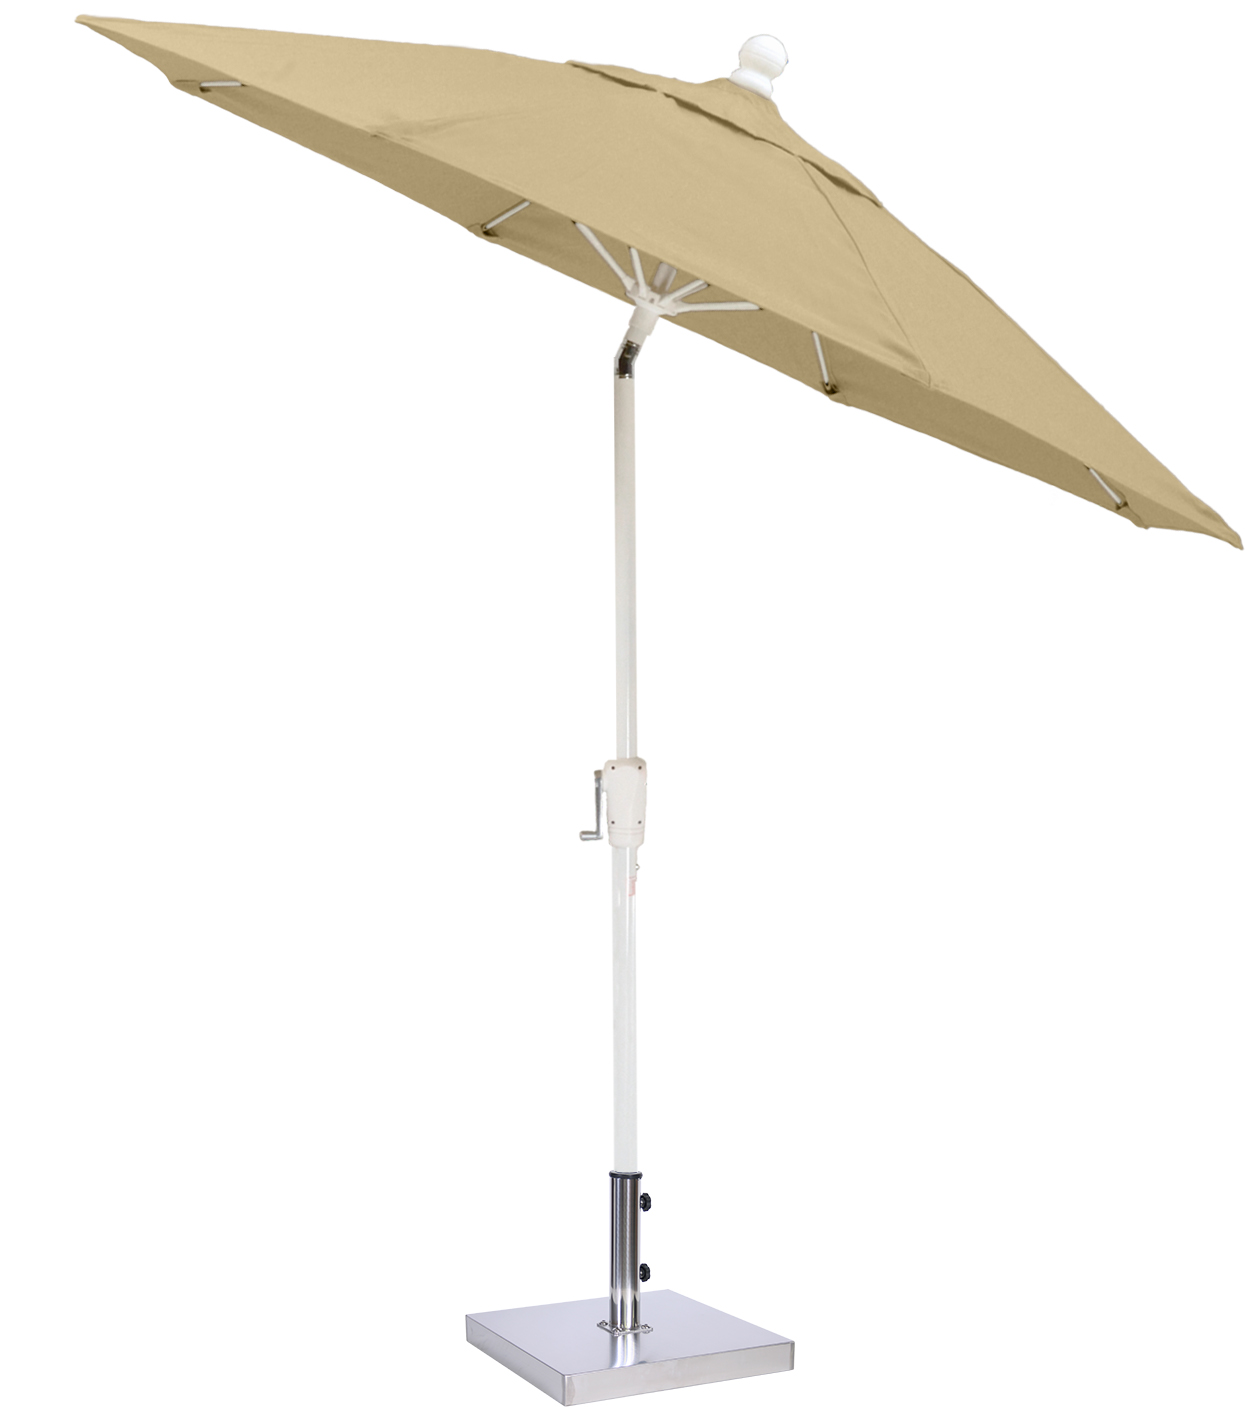 MiYu Furniture  9 ft Fiberglass Market Umbrella with Auto Tilt - White Frame